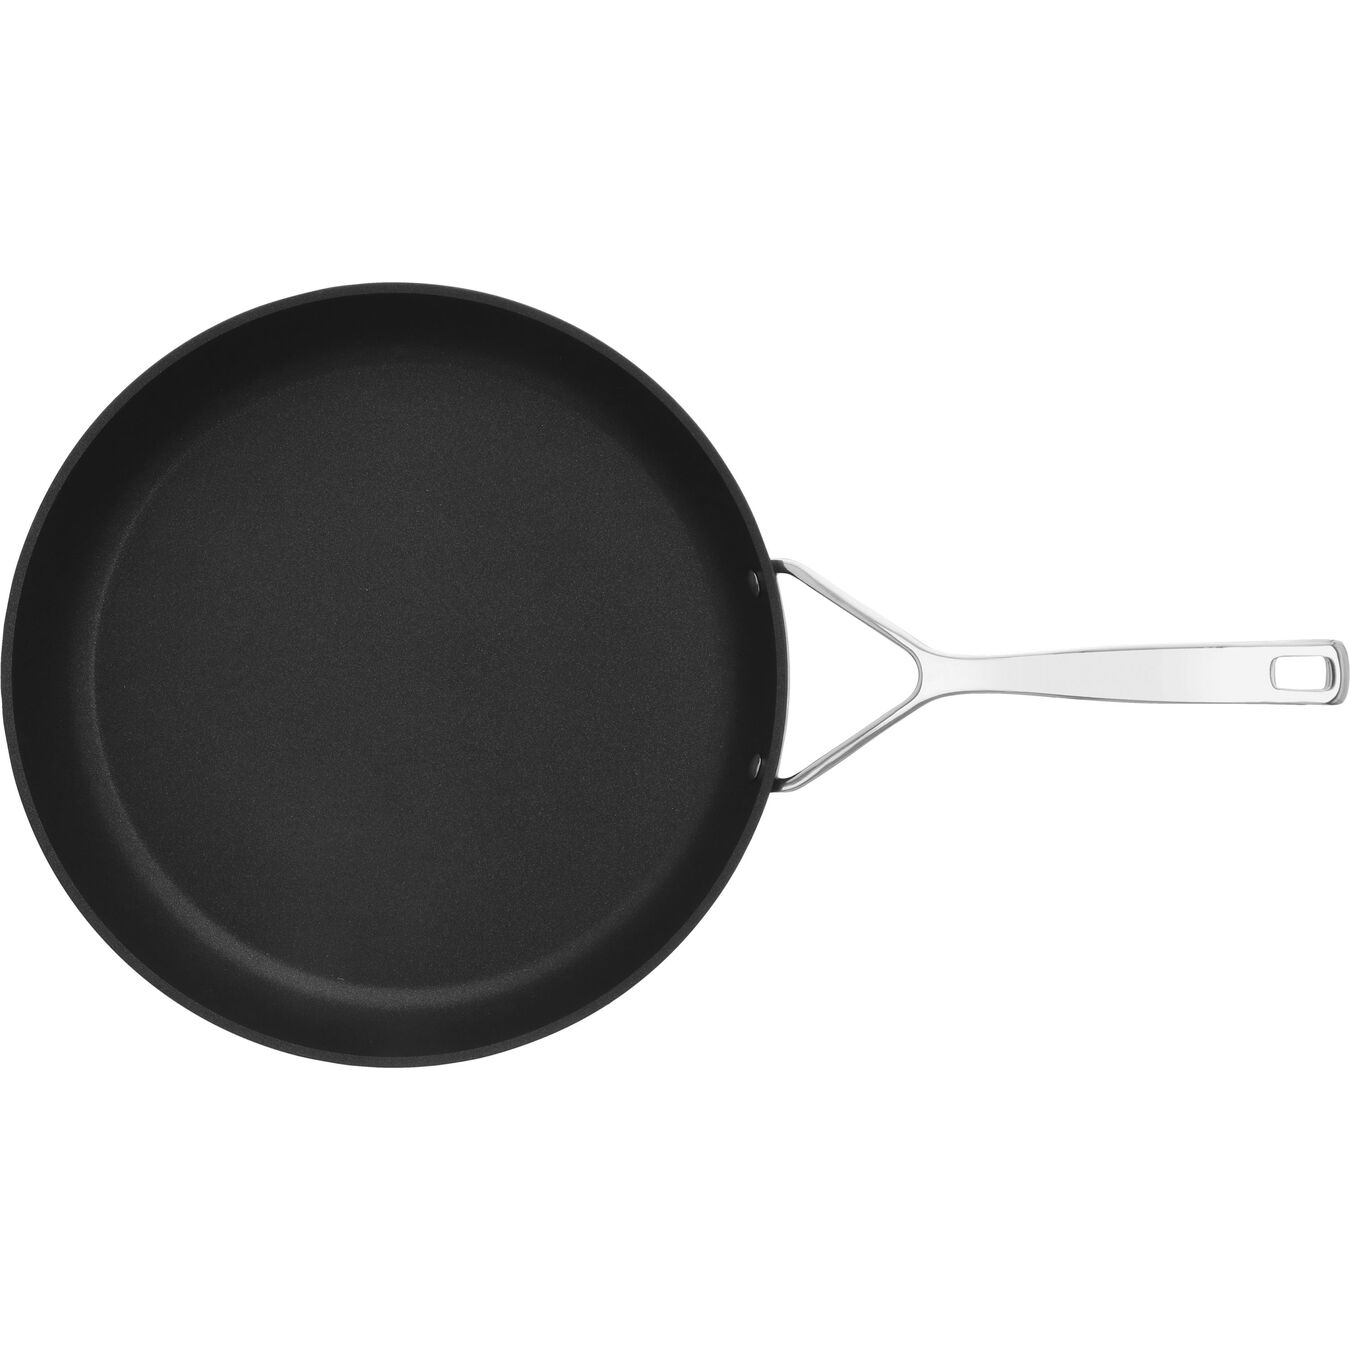 32 cm Aluminum Frying pan silver-black,,large 4